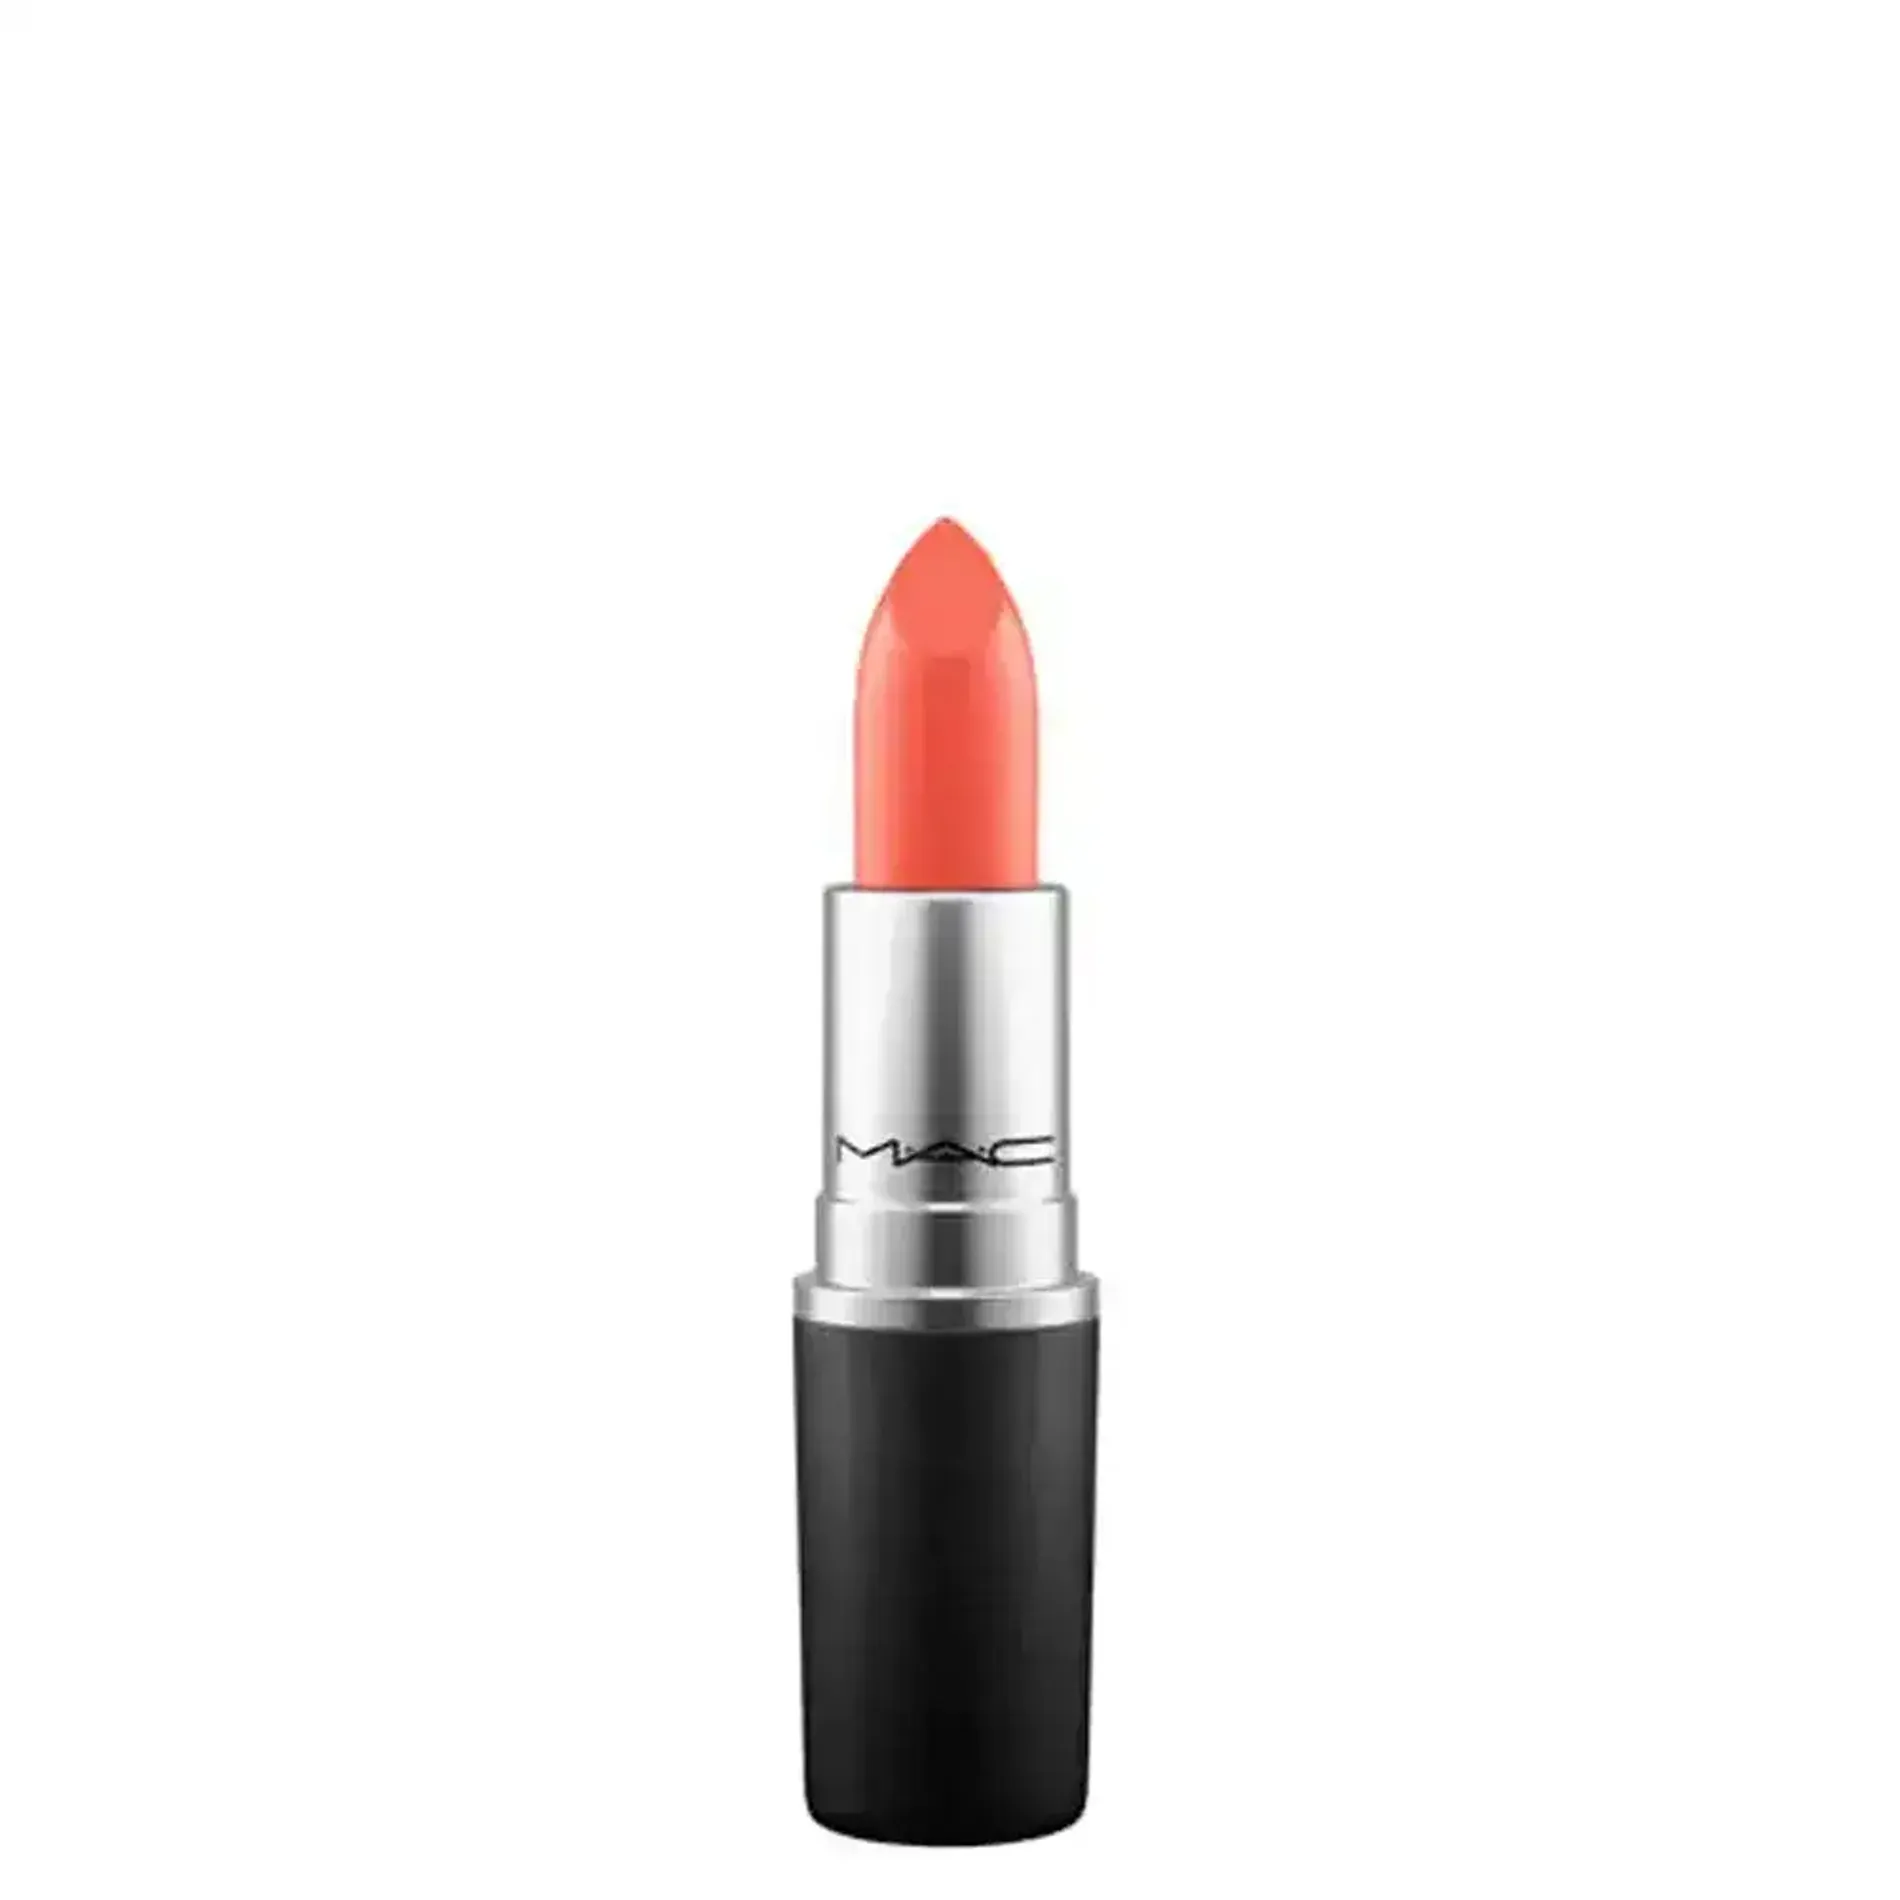 son-thoi-mac-lustre-lipstick-3g-7